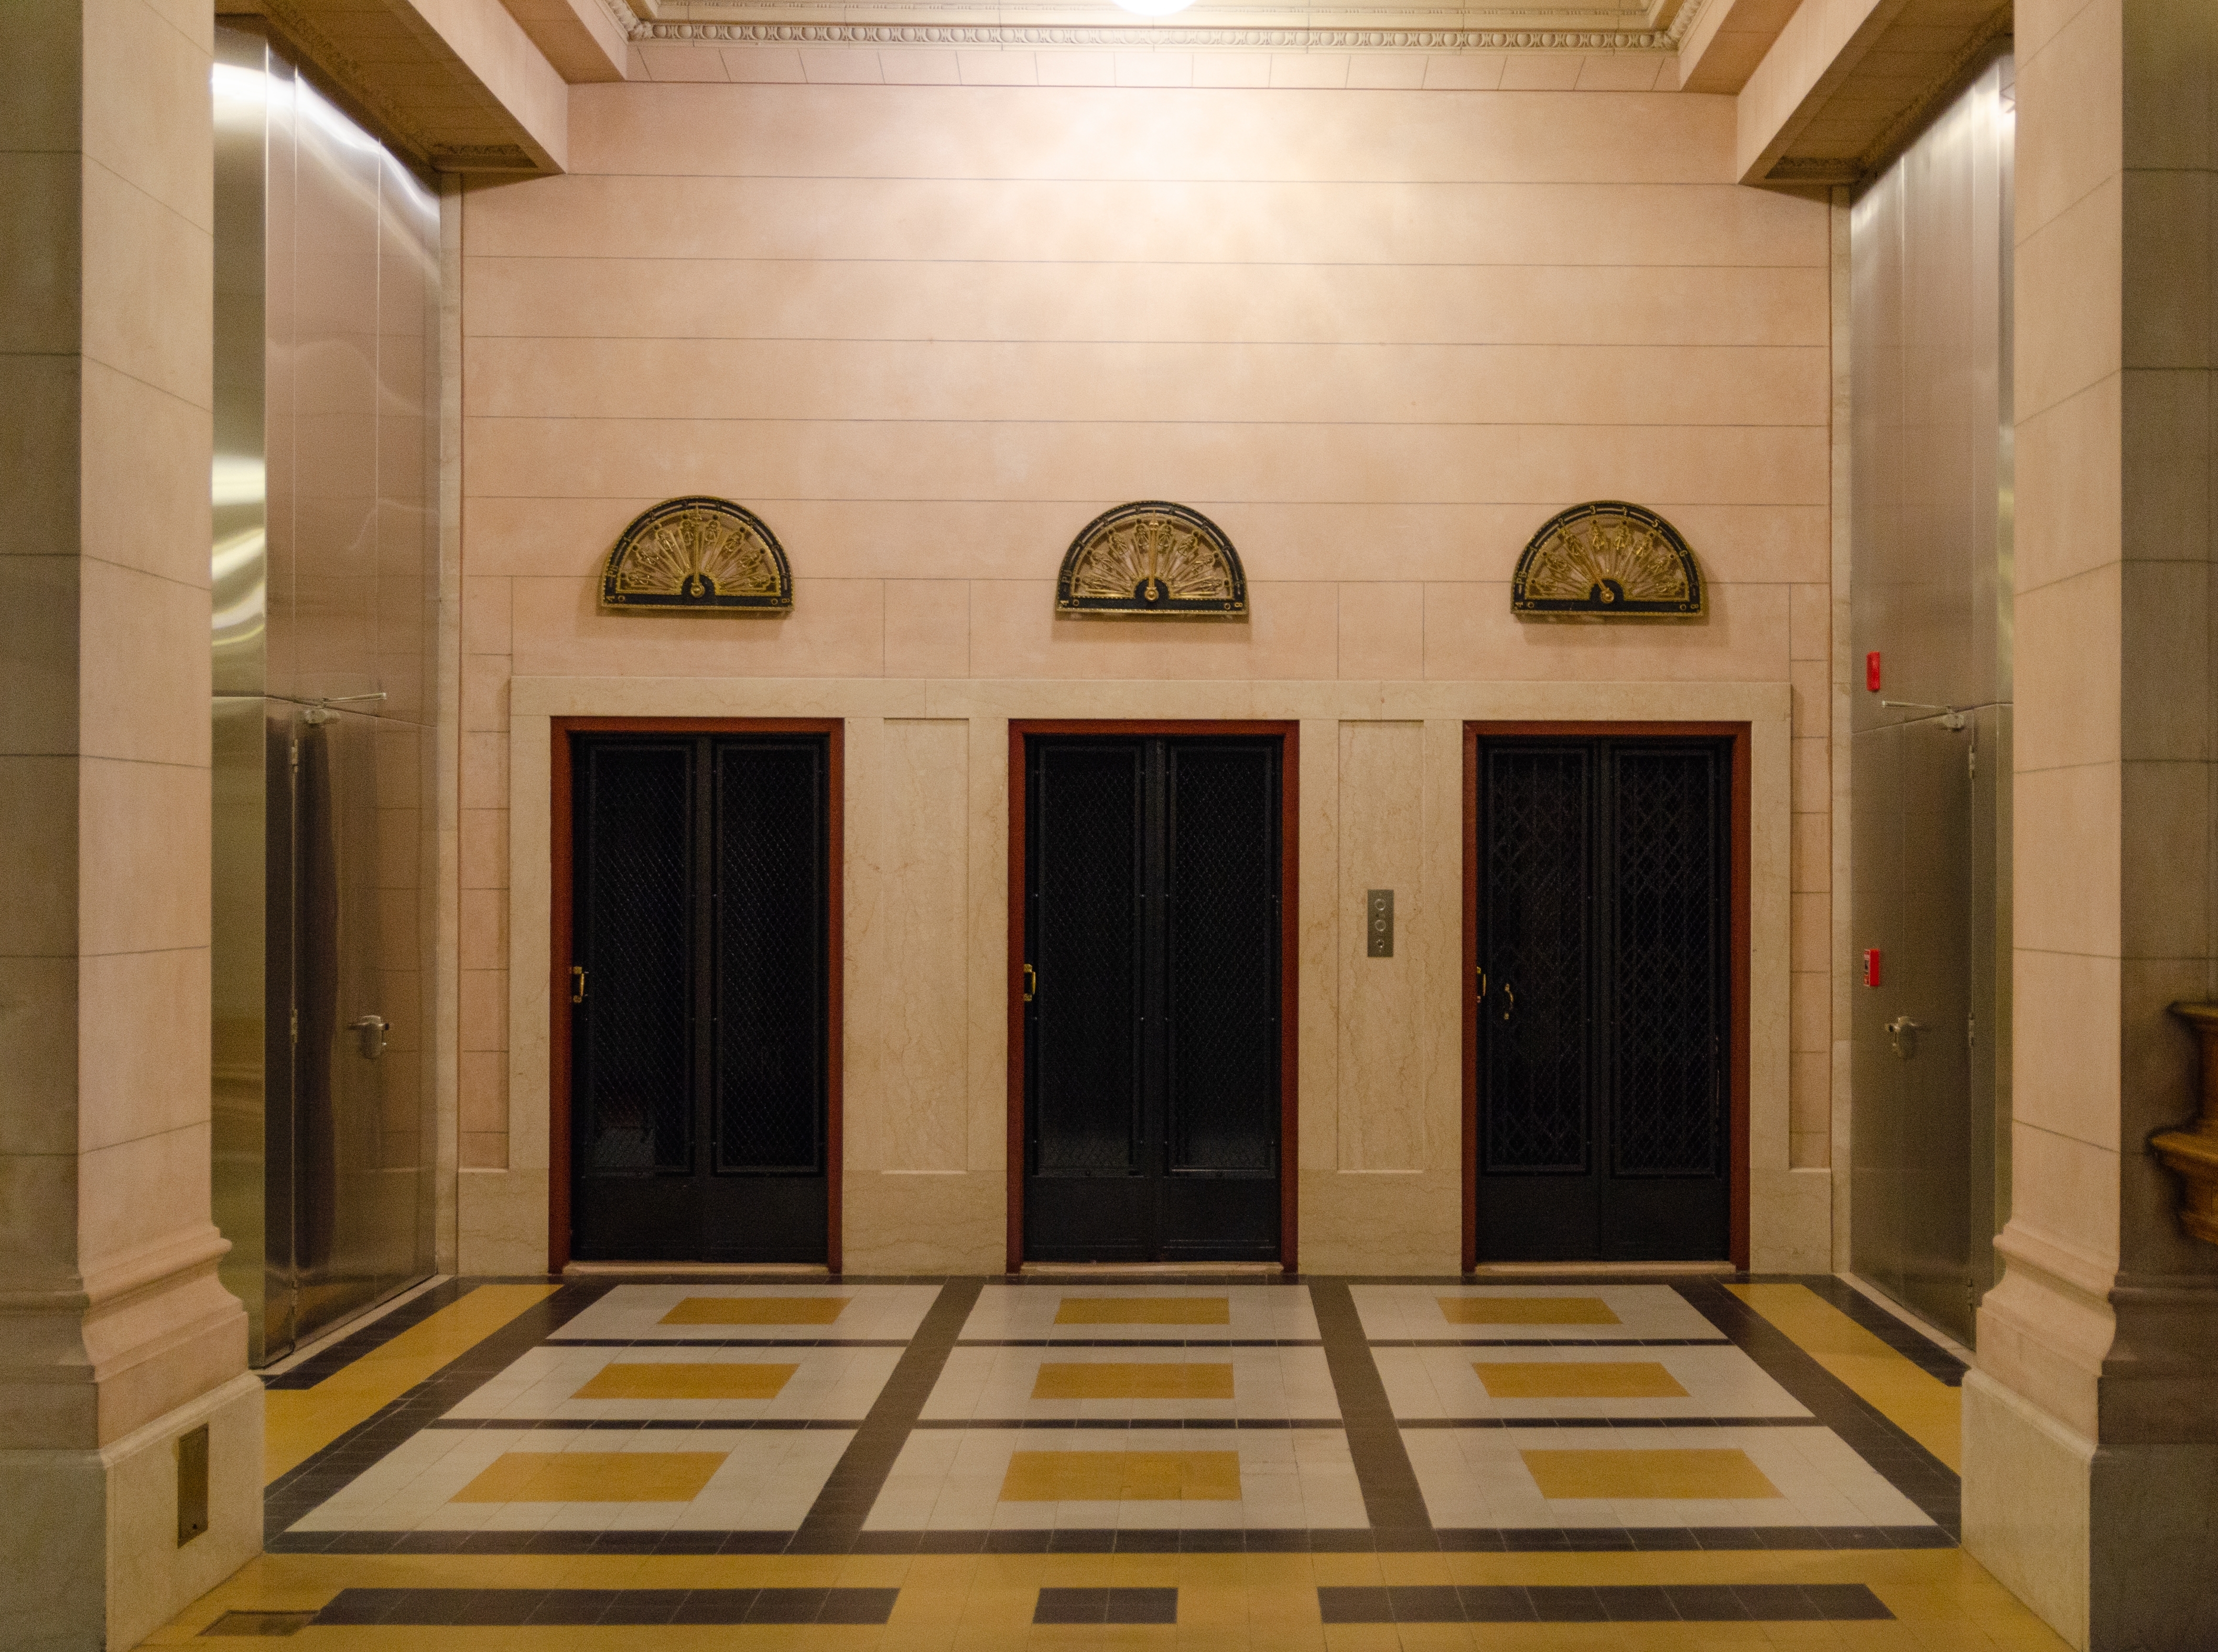 Old luxury hotel elevator hall | Source: Shutterstock